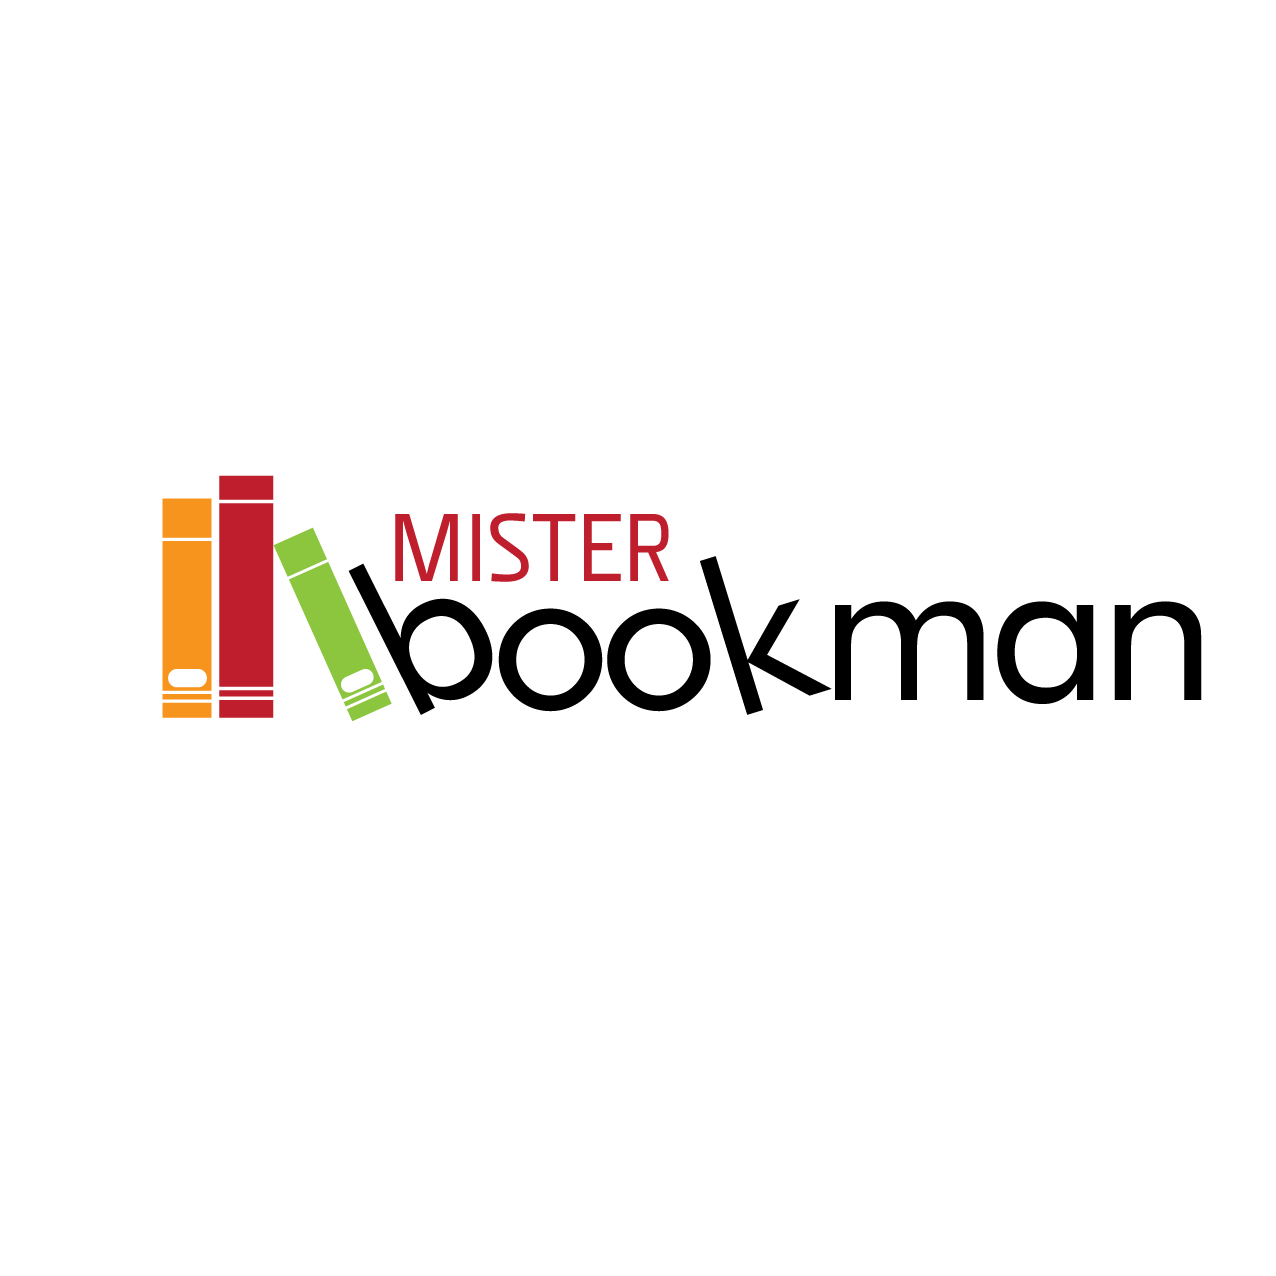 Bookstore Logo - Logo Design for On-line Bookstore | 101 Logo Designs for Mister Bookman